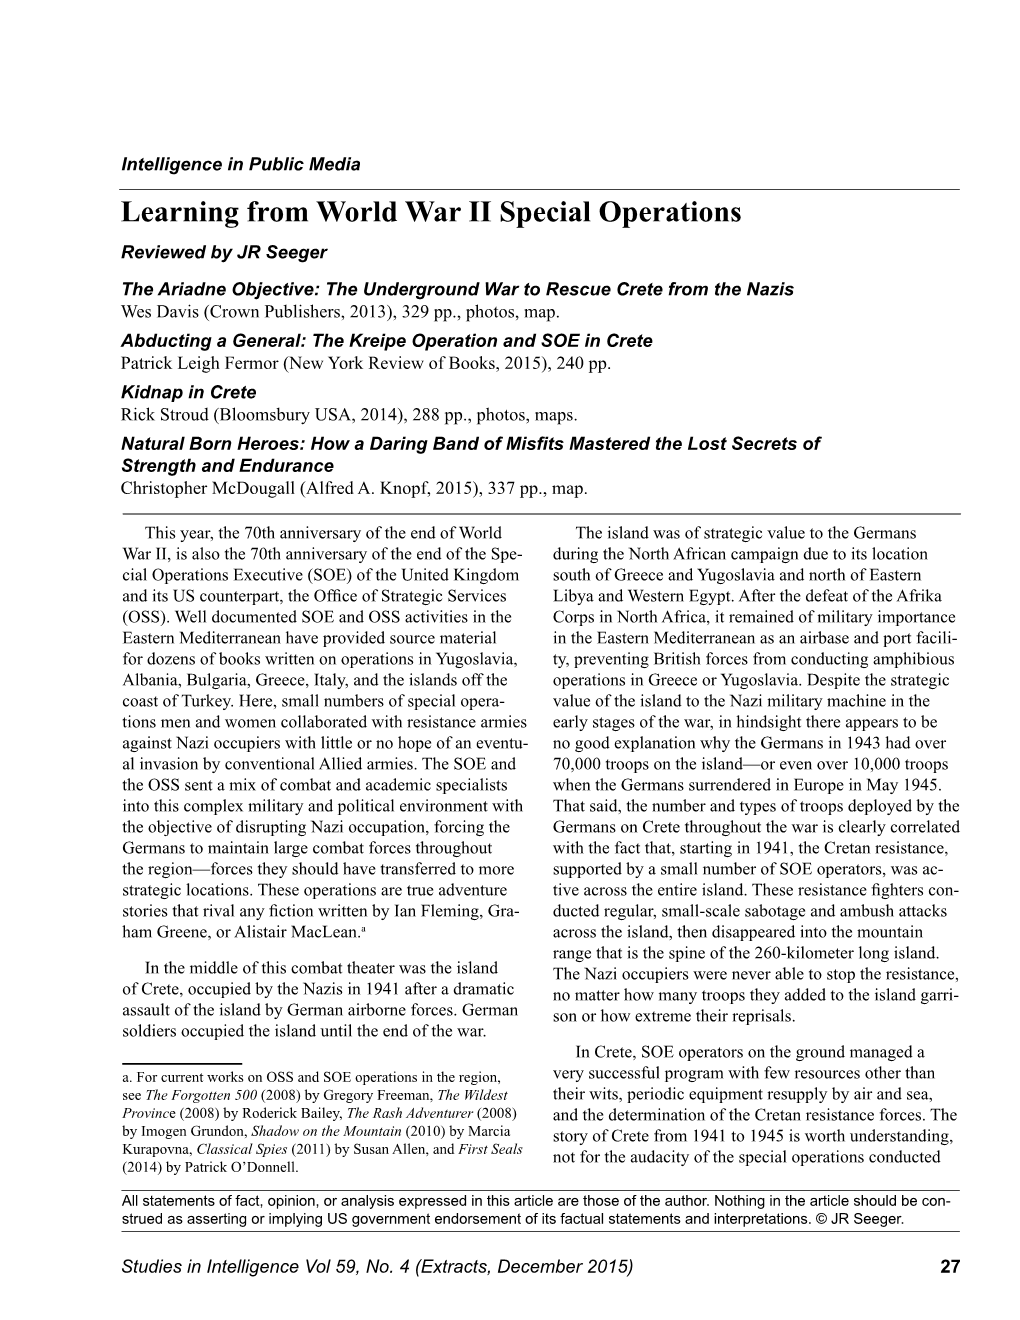 World W War II Special Operations